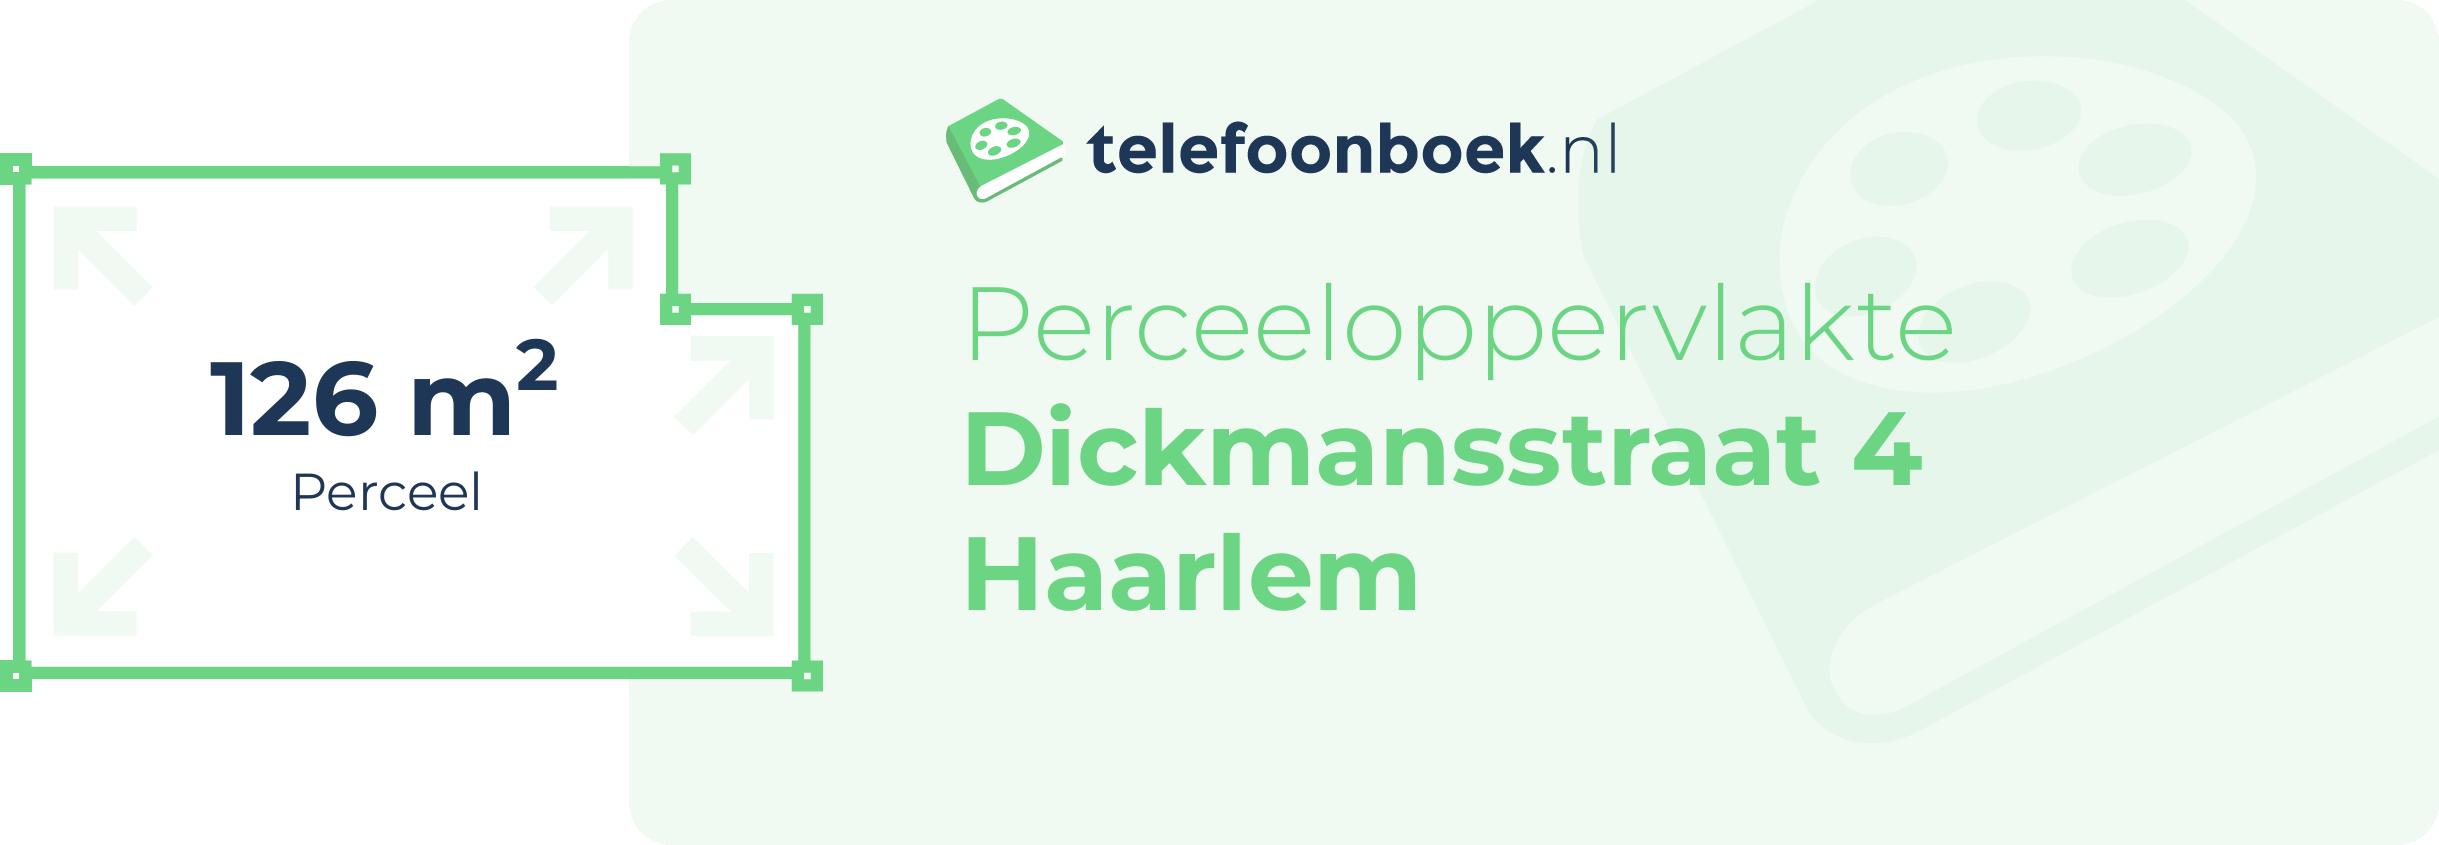 Perceeloppervlakte Dickmansstraat 4 Haarlem